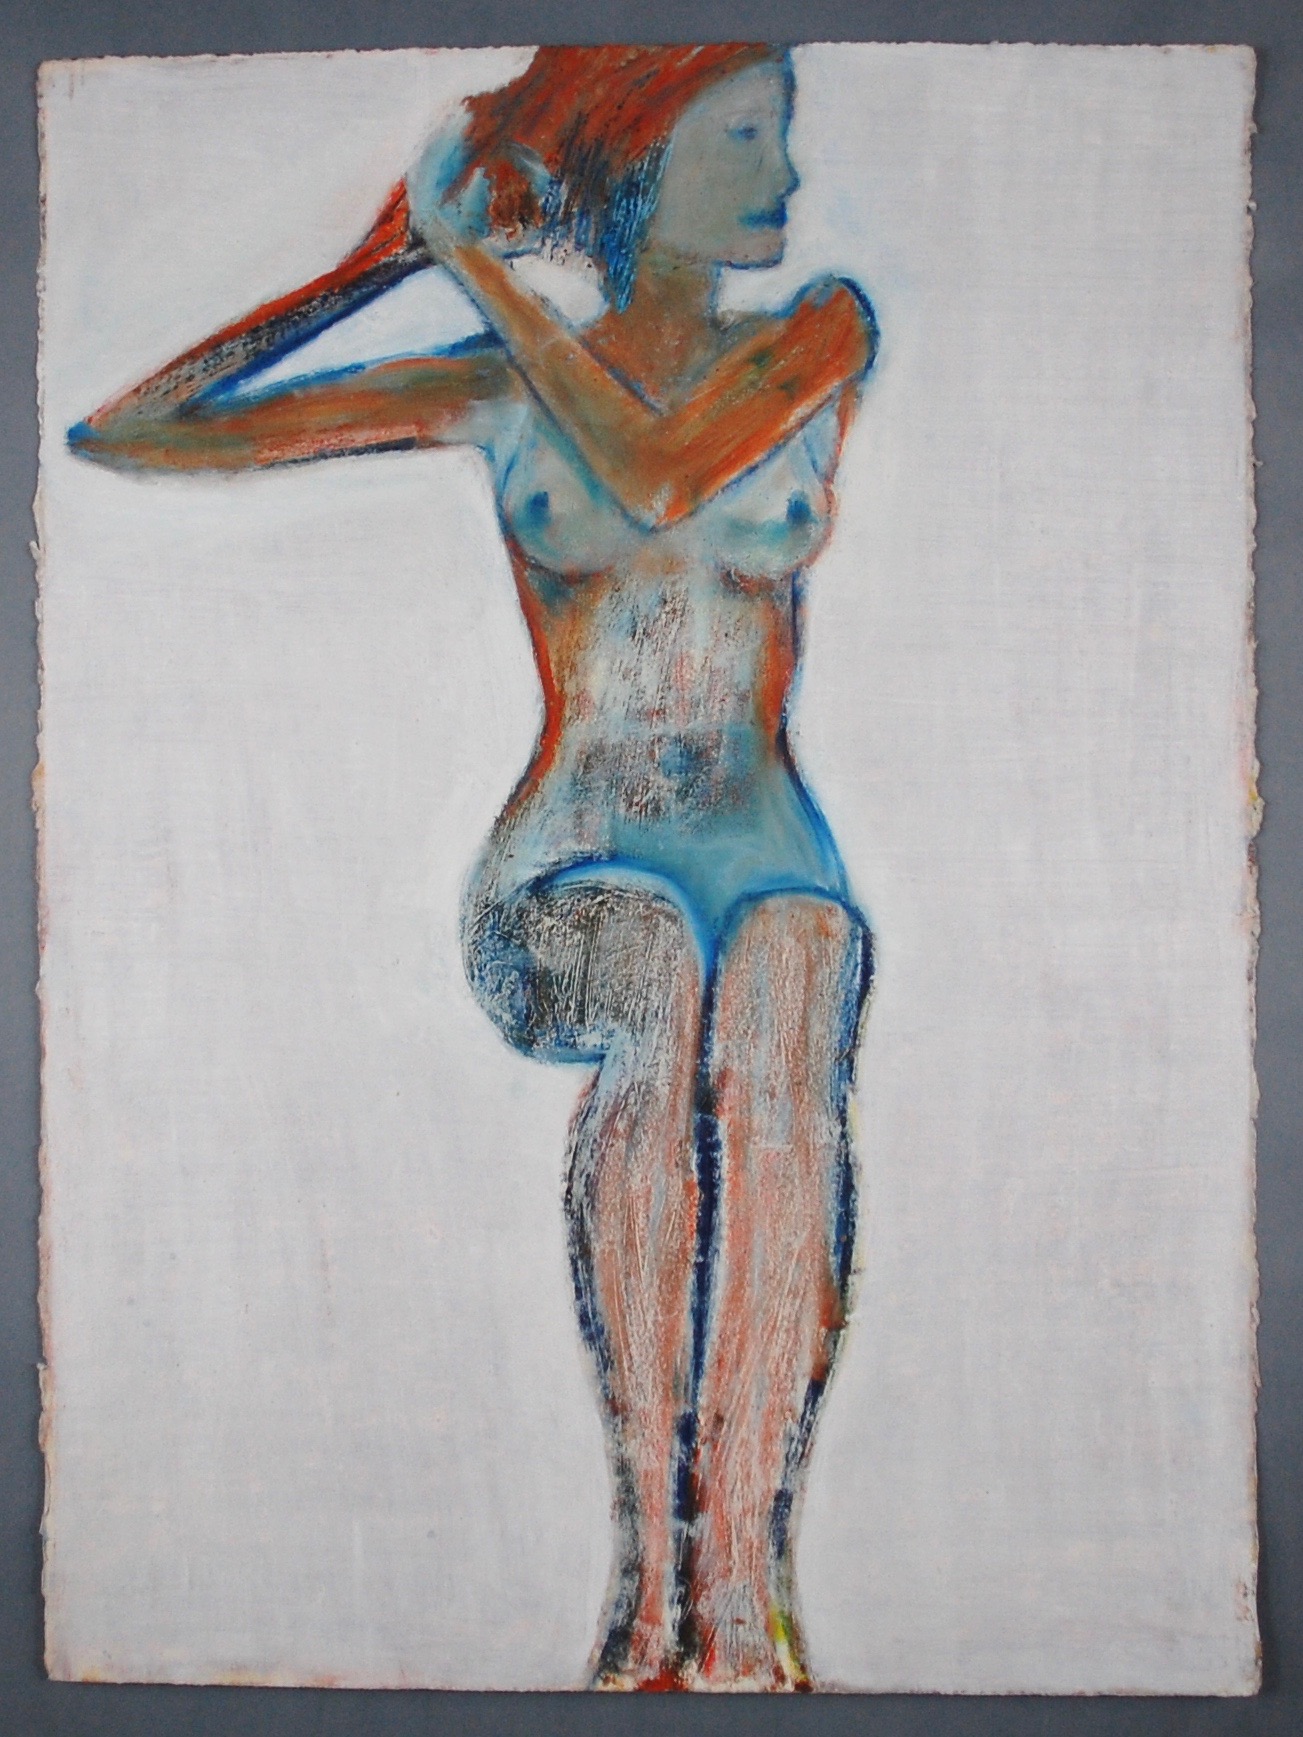 Seated female nude #2 after Schiele